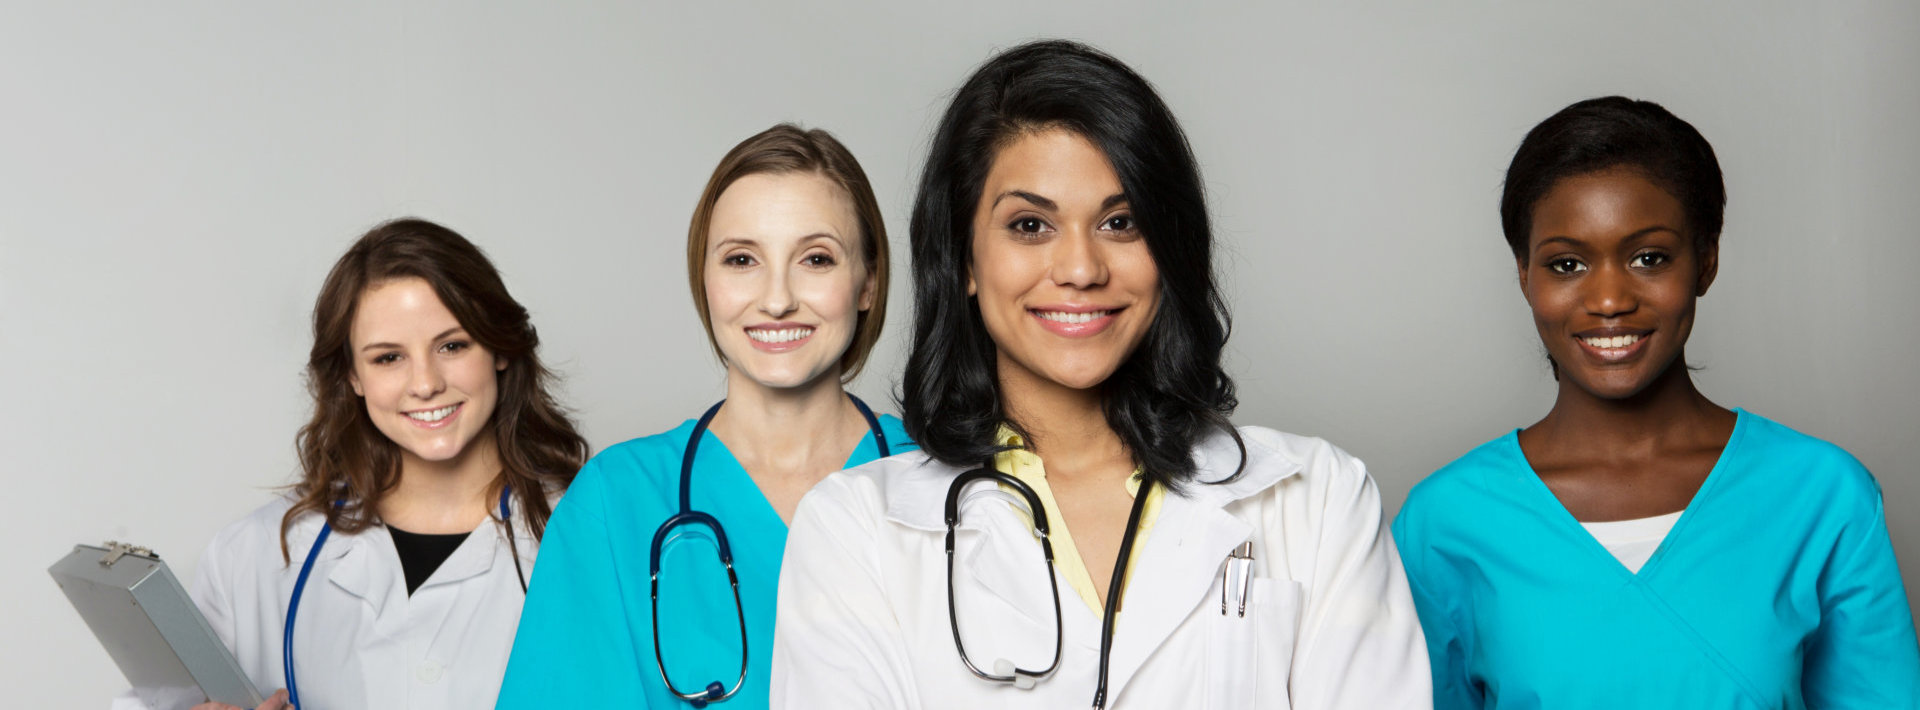 female medical stafffs smiling